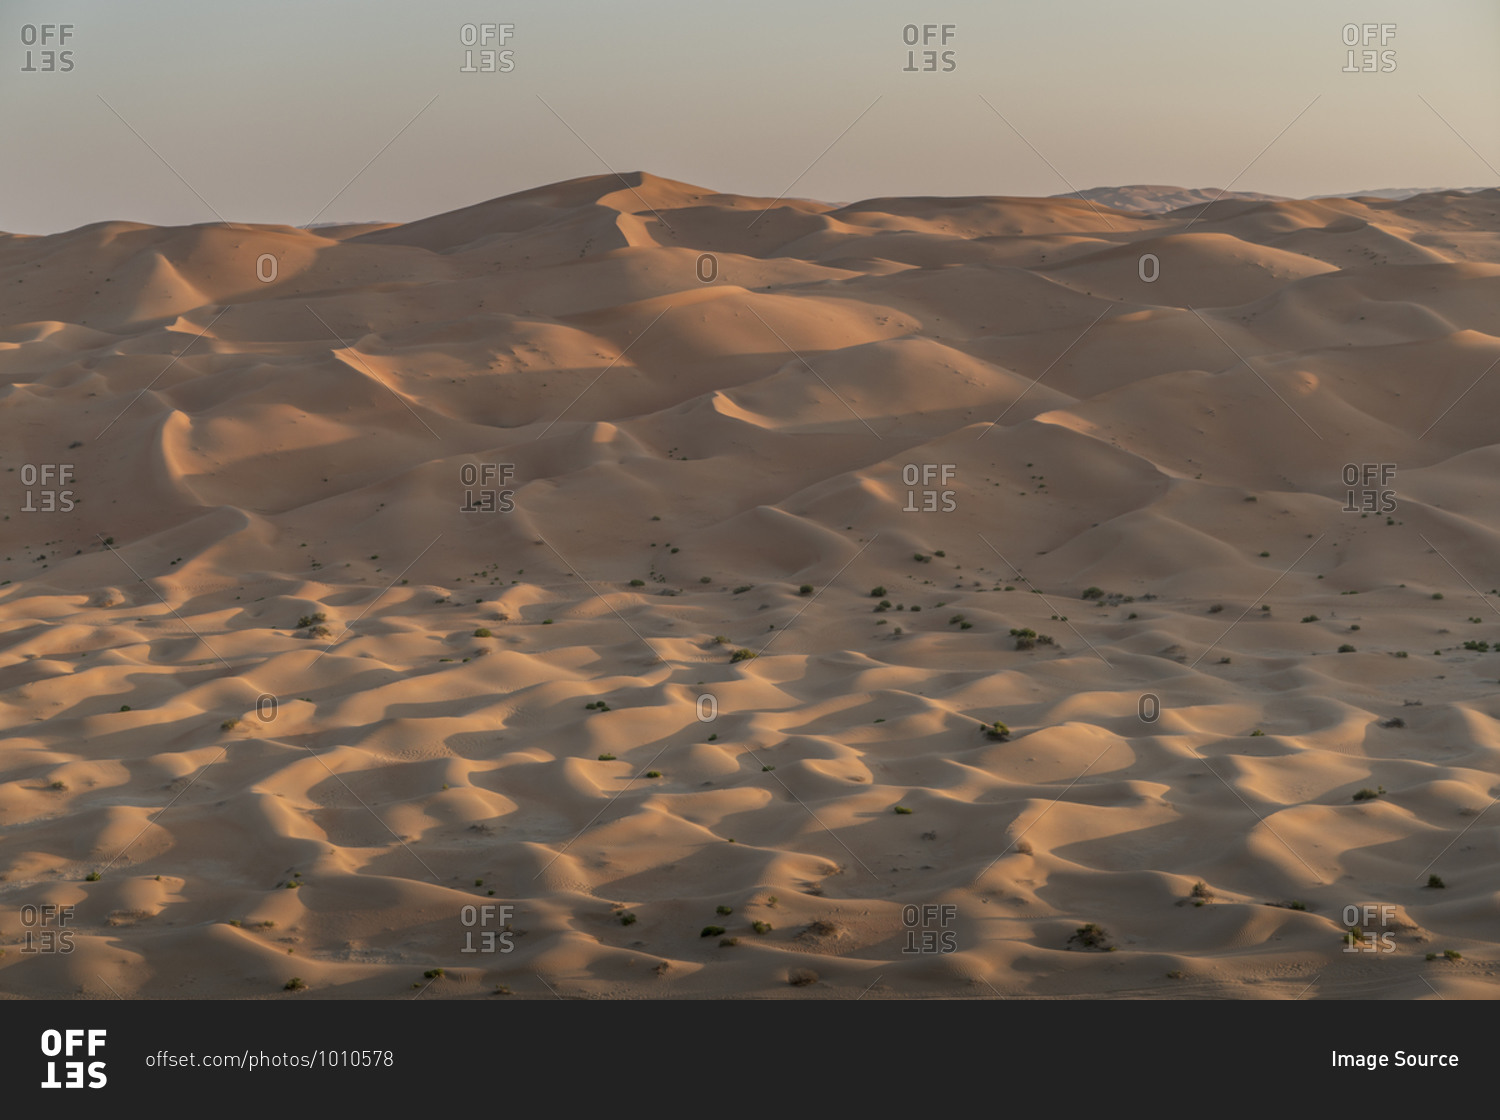 Sand dunes in the Empty Quarter Desert, between Saudi Arabia and Abu Dhabi, UAE